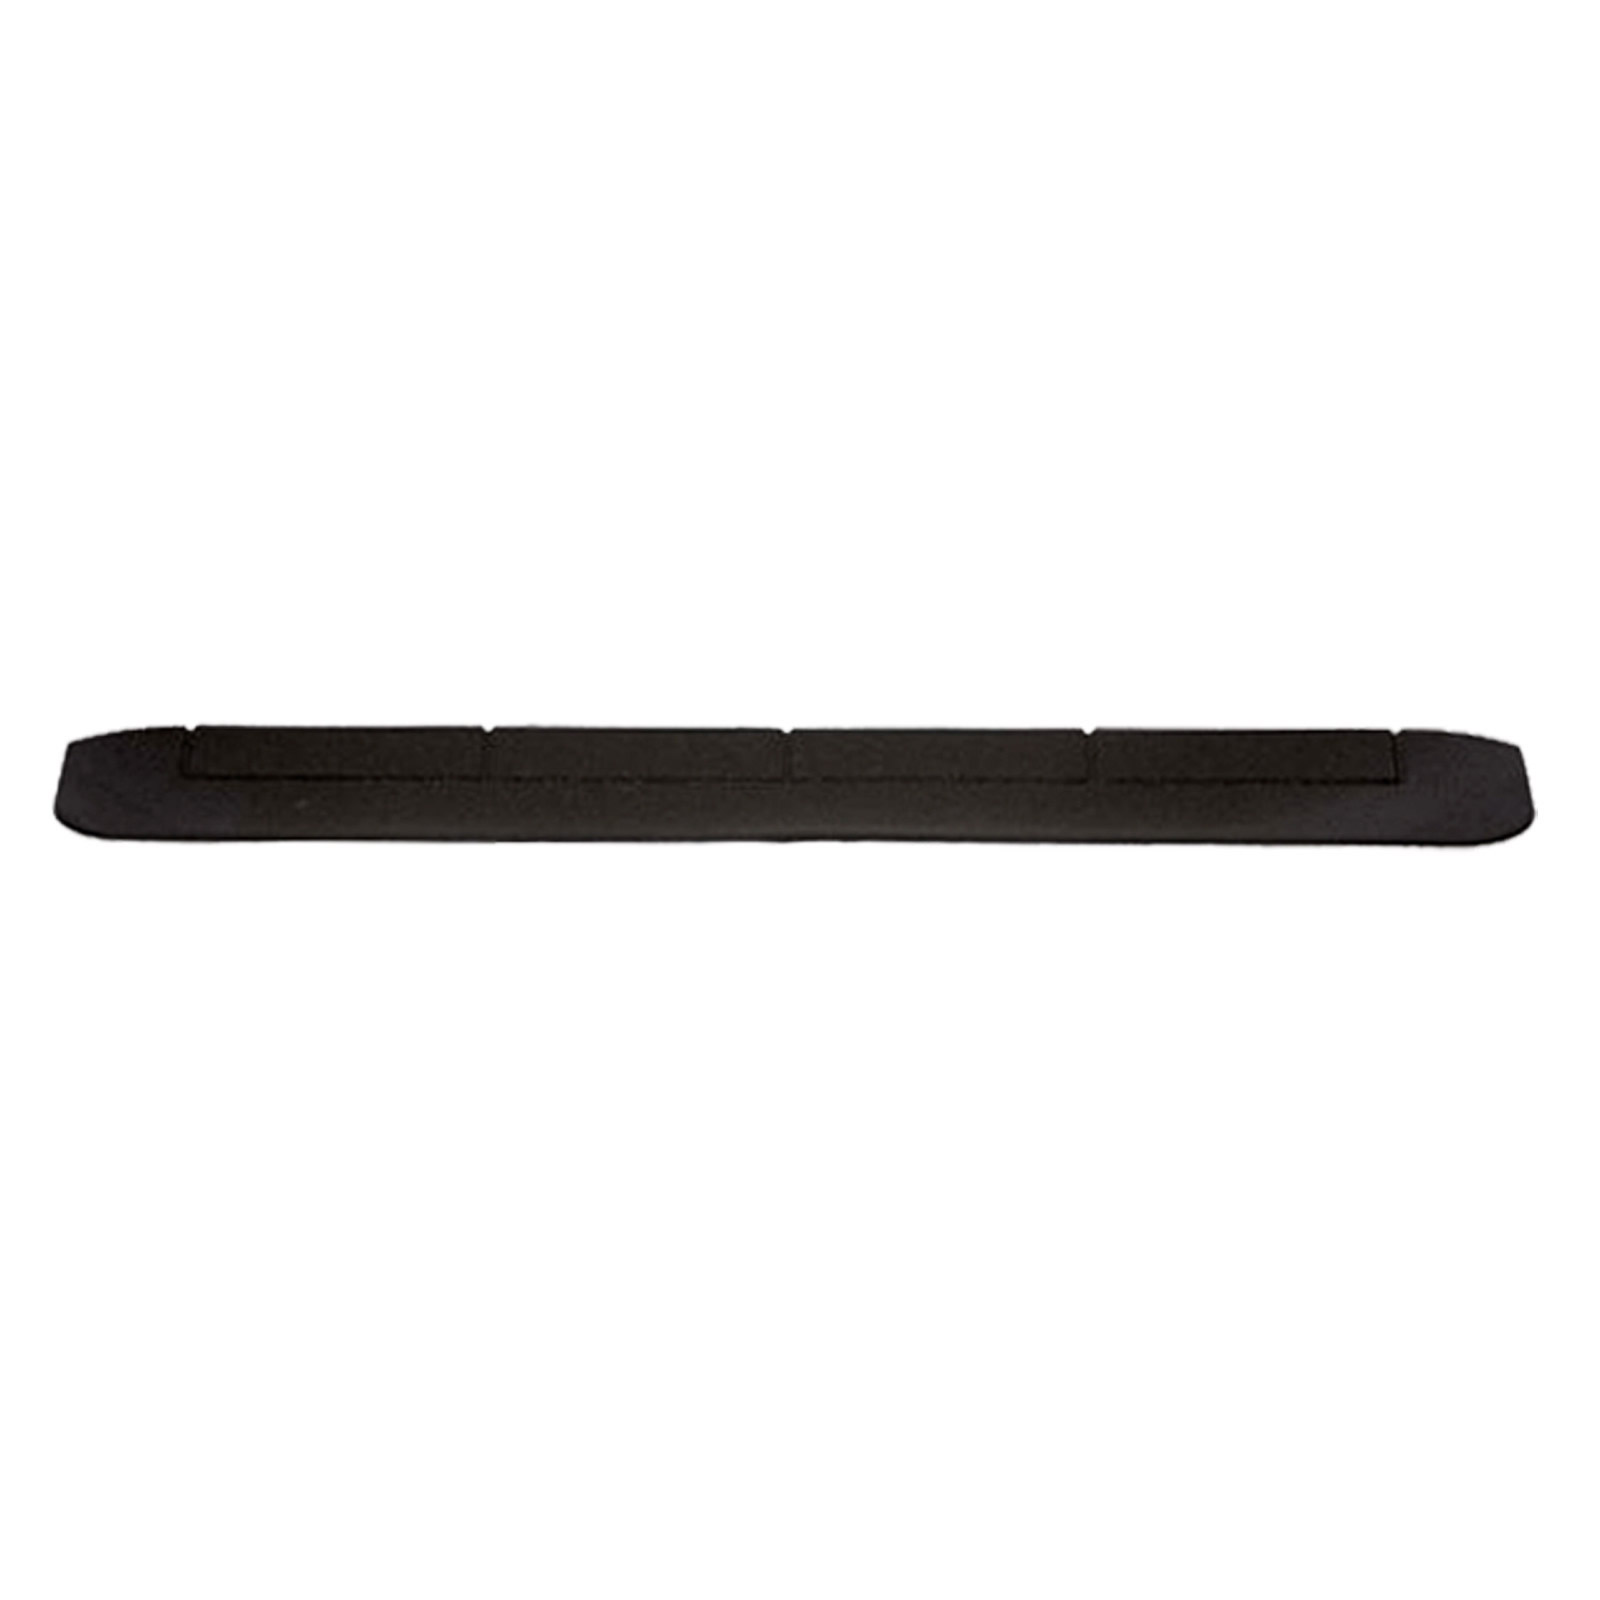 Drempelhulp zwart | Max. 2500 kg | 90 x 12 x 1,5 cm